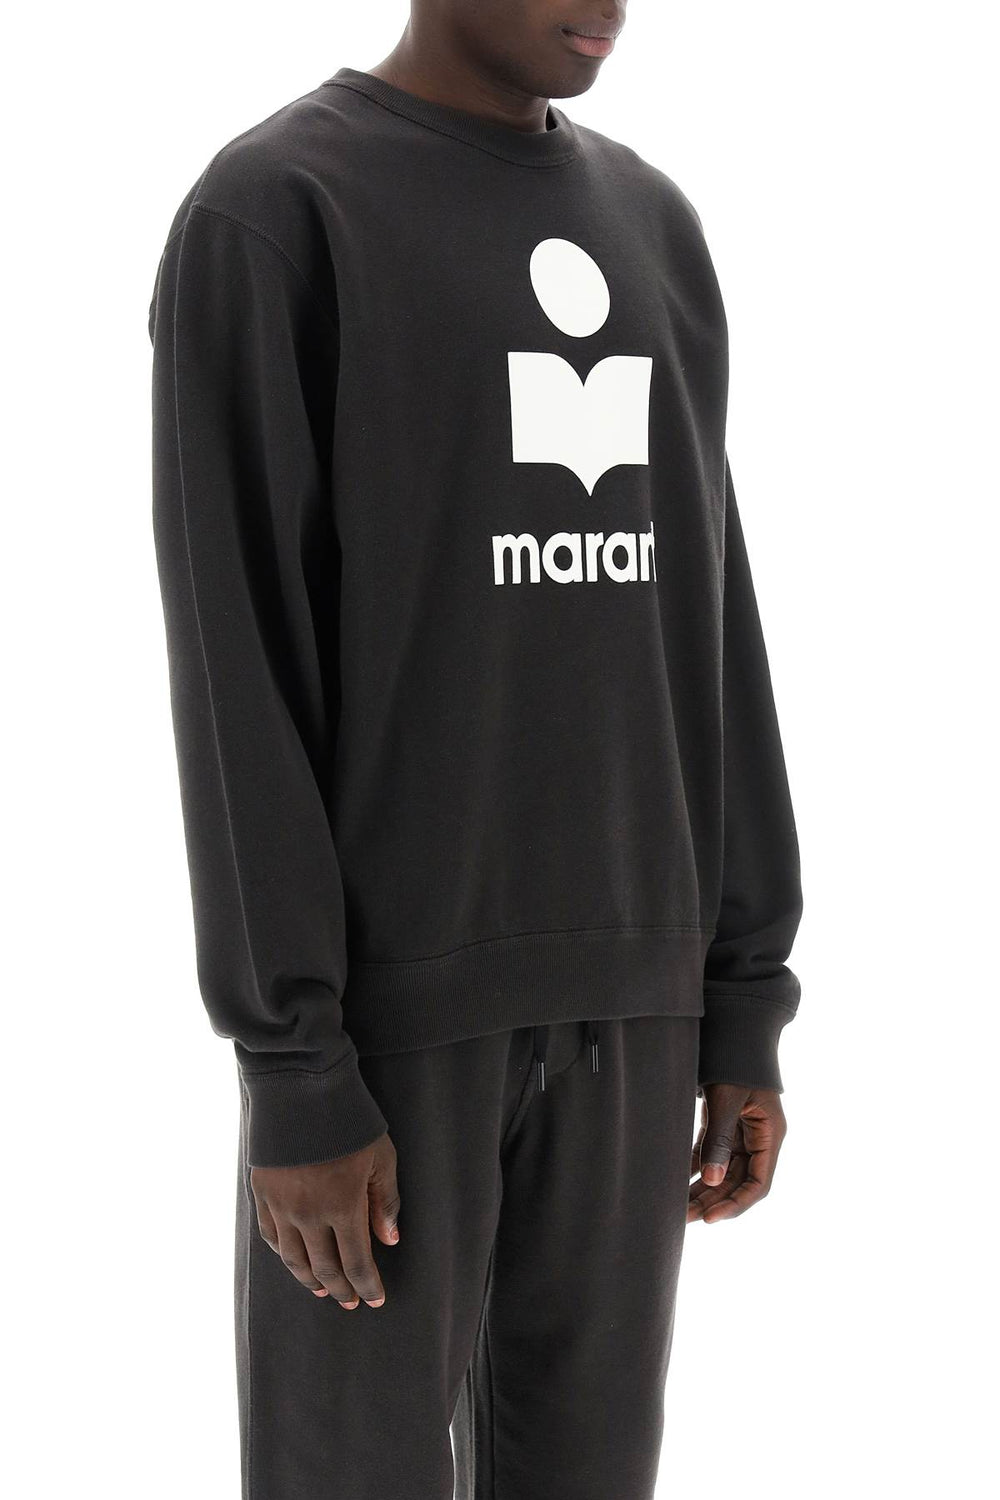 Marant mikoy flocked logo sweatshirt-1